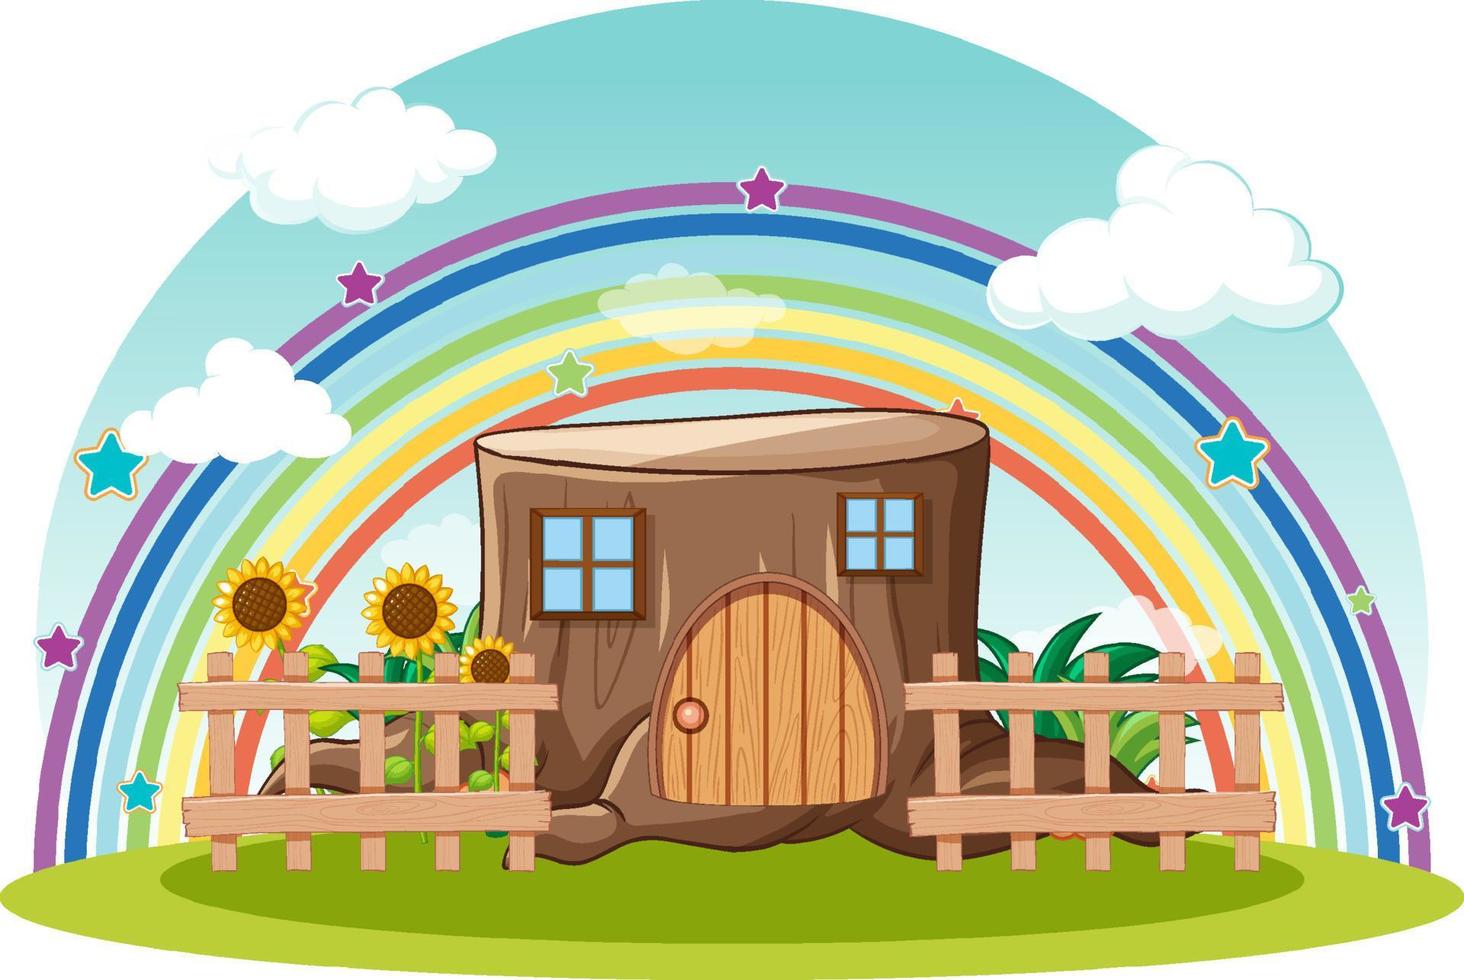 Fantasy log house with rainbow in the sky vector